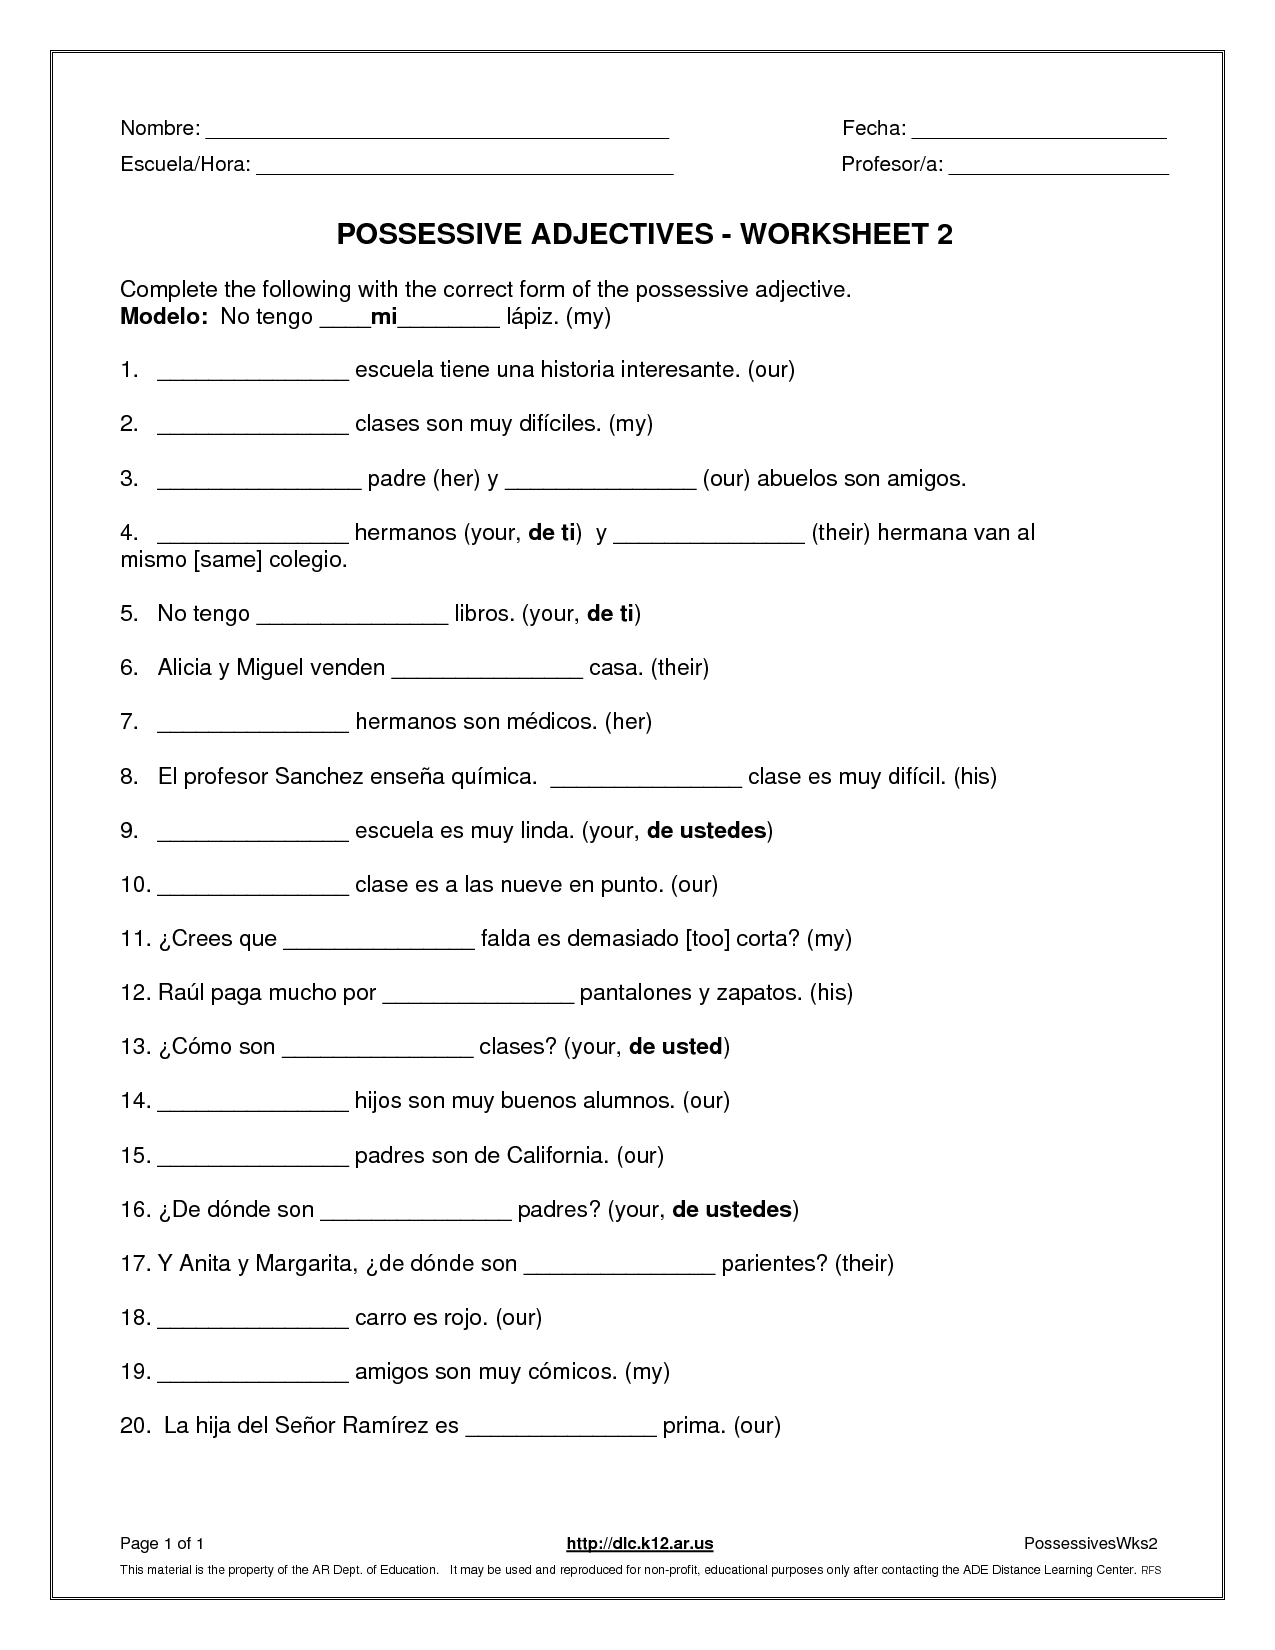 19-best-images-of-possessive-pronouns-worksheets-for-esl-plural-possessive-nouns-worksheets